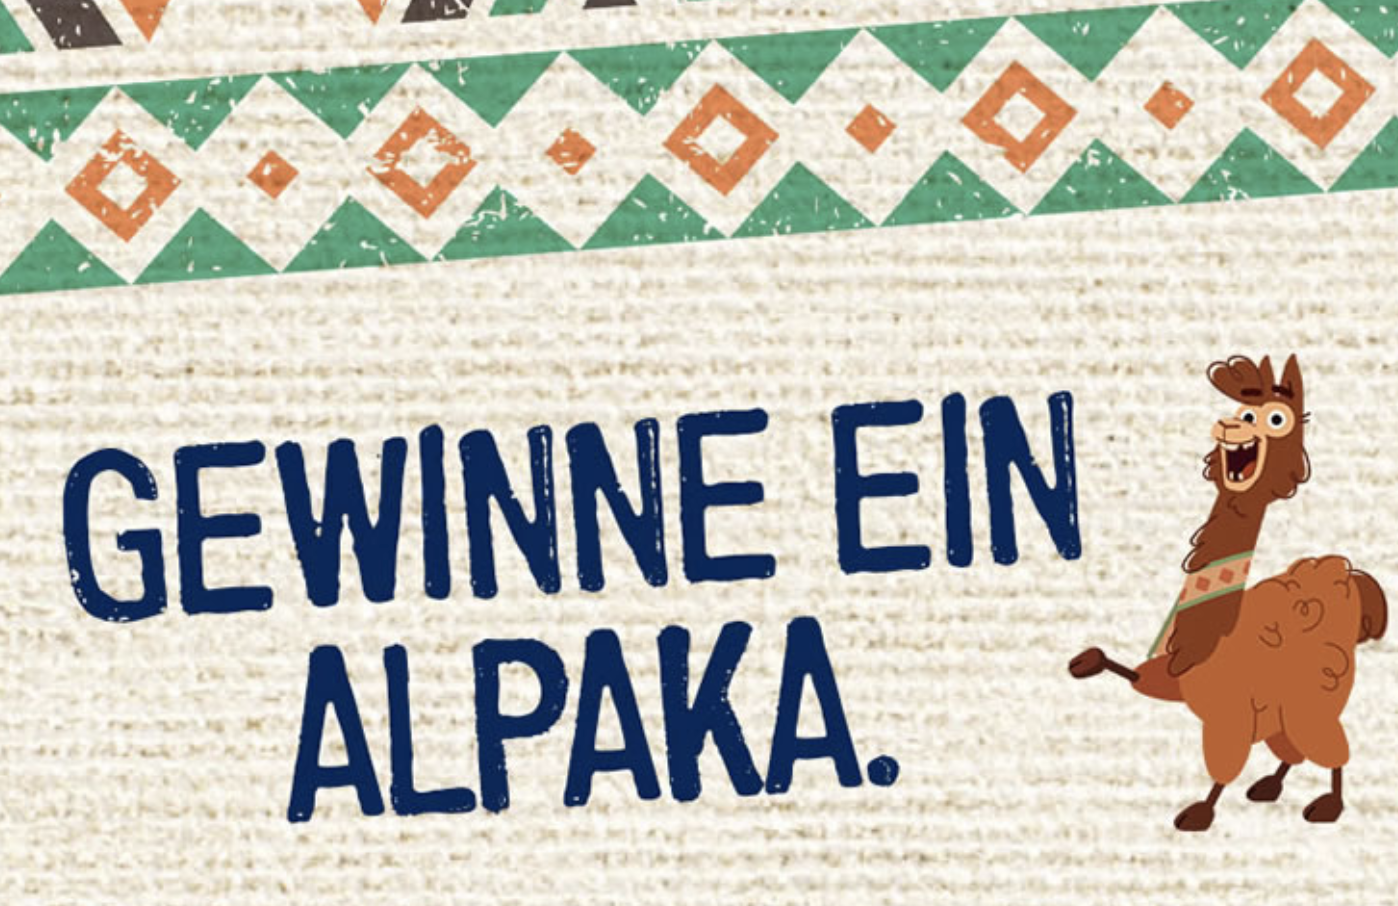 Bionade Gewinnspiel: Alpaka-Wanderung zu gewinnen